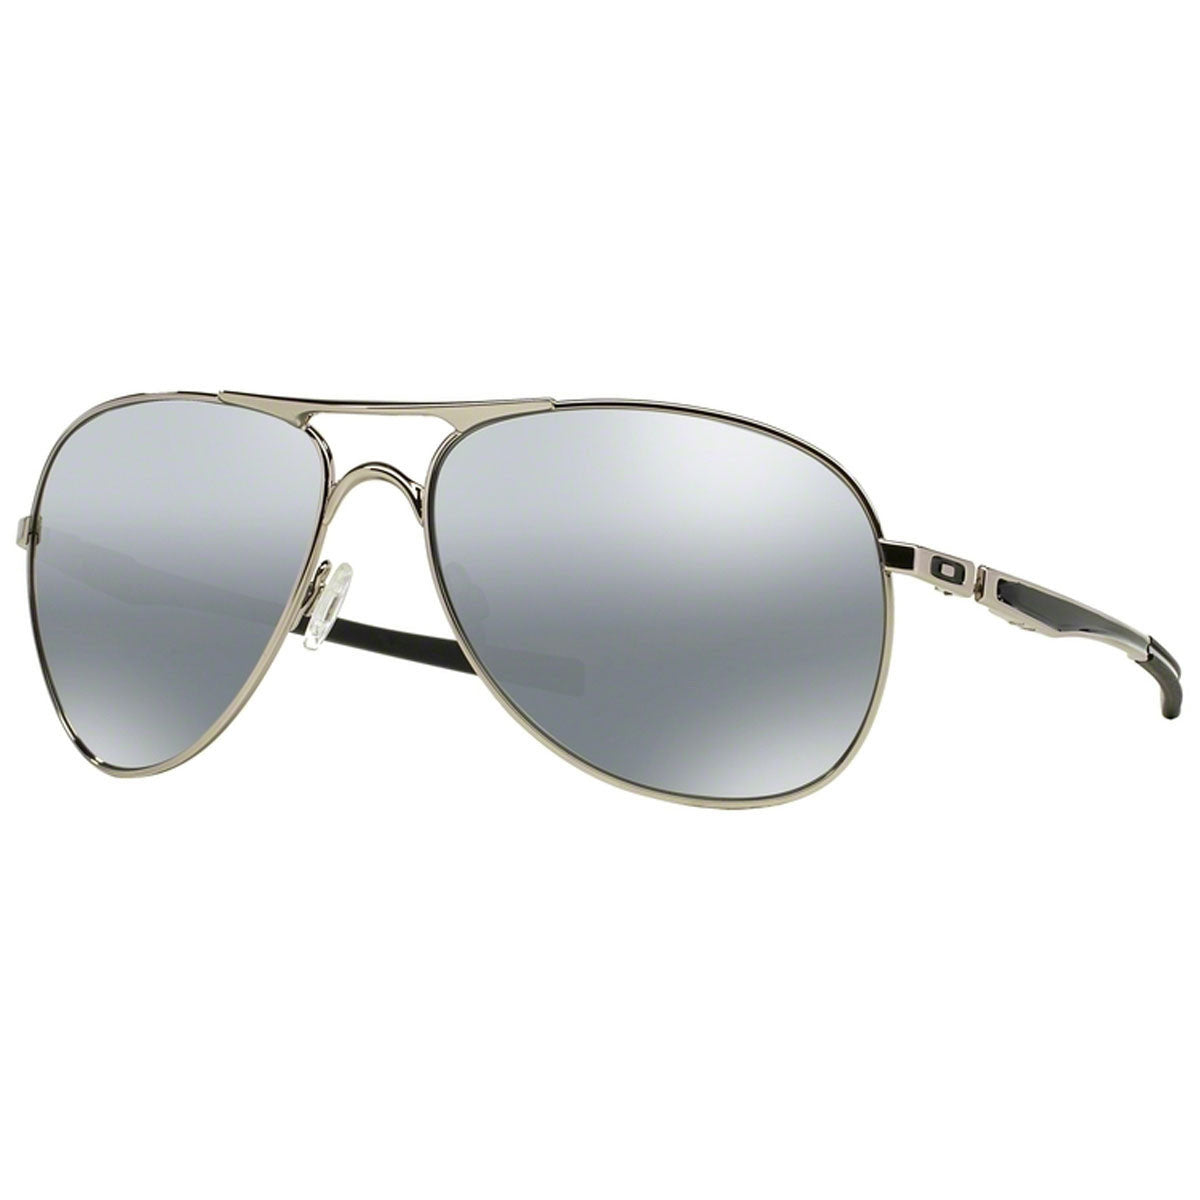 Oakley Plaintiff Sunglasses - Polished Chrome / Chrome Iridium Lens - OO4057-03